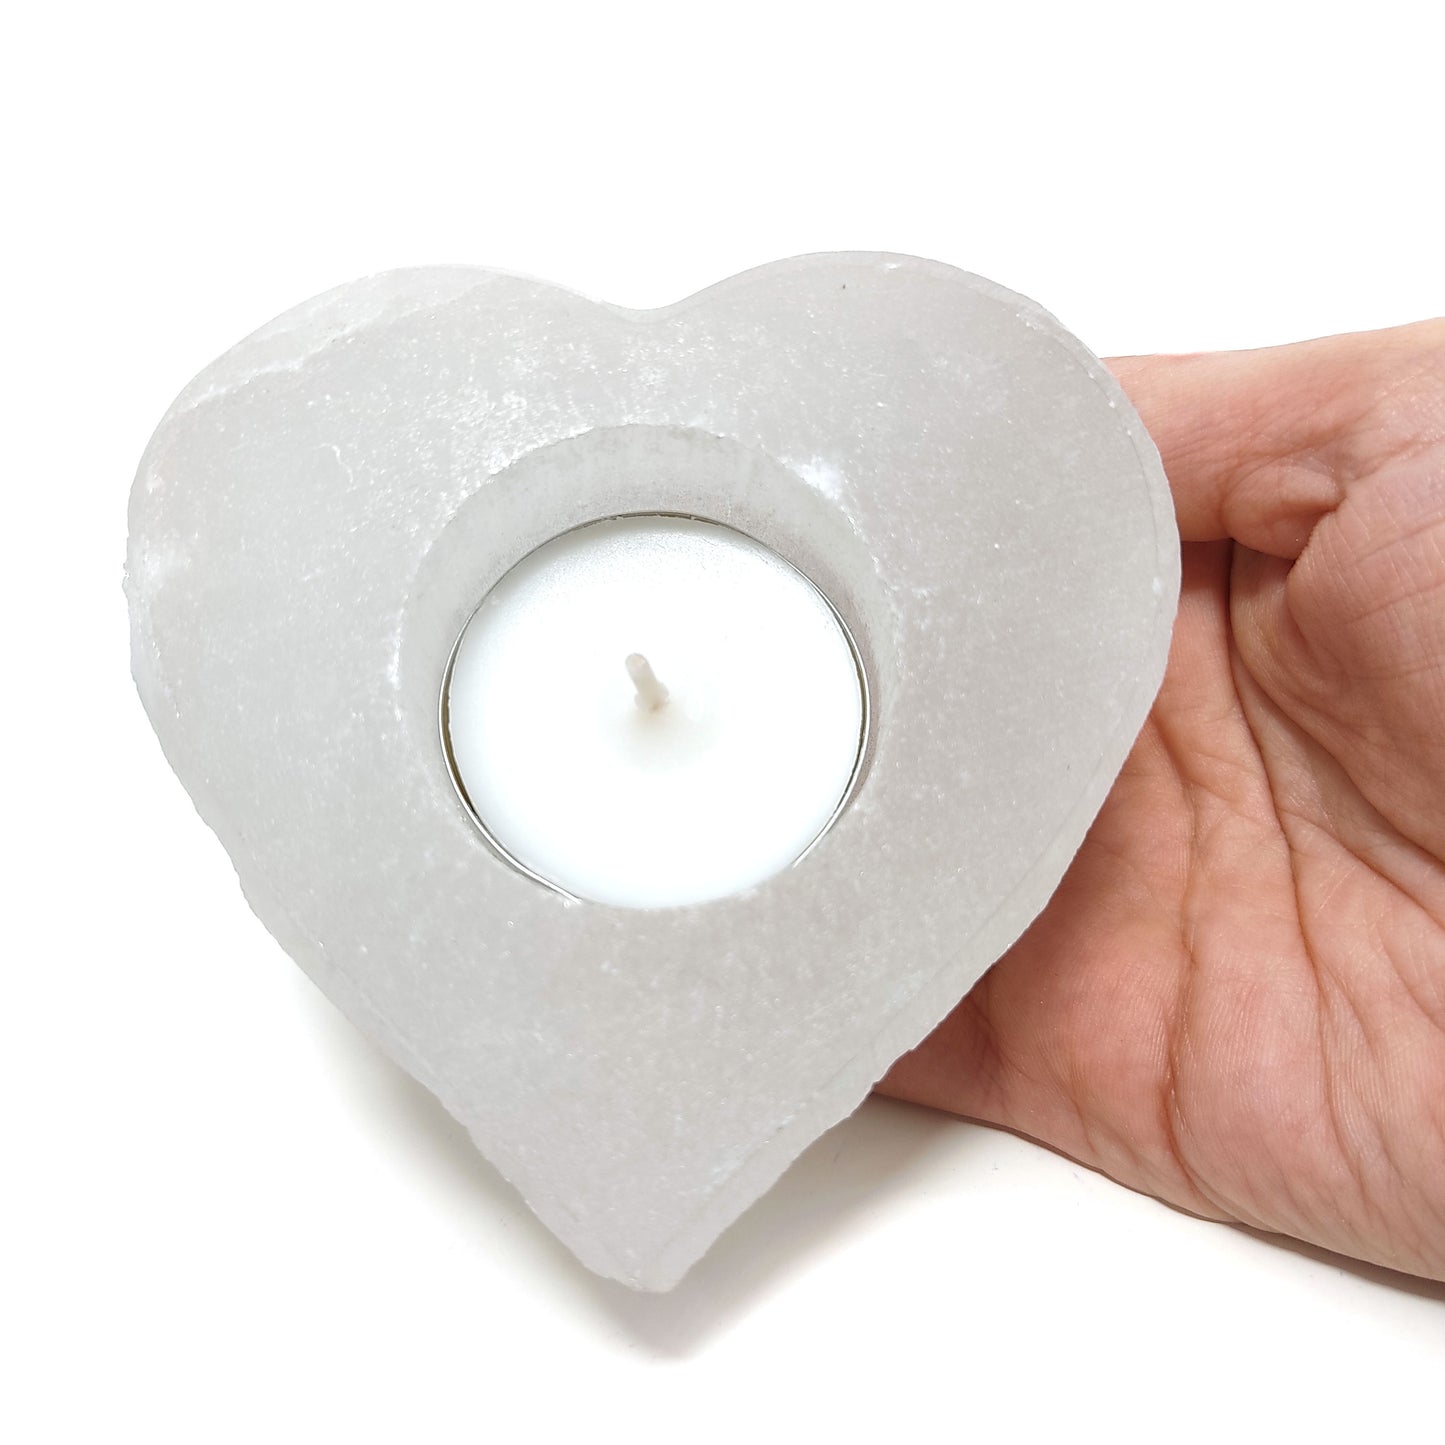 Selenite Heart Gift Set Heart Candle Holder and Selenite Heart Pendant Necklace